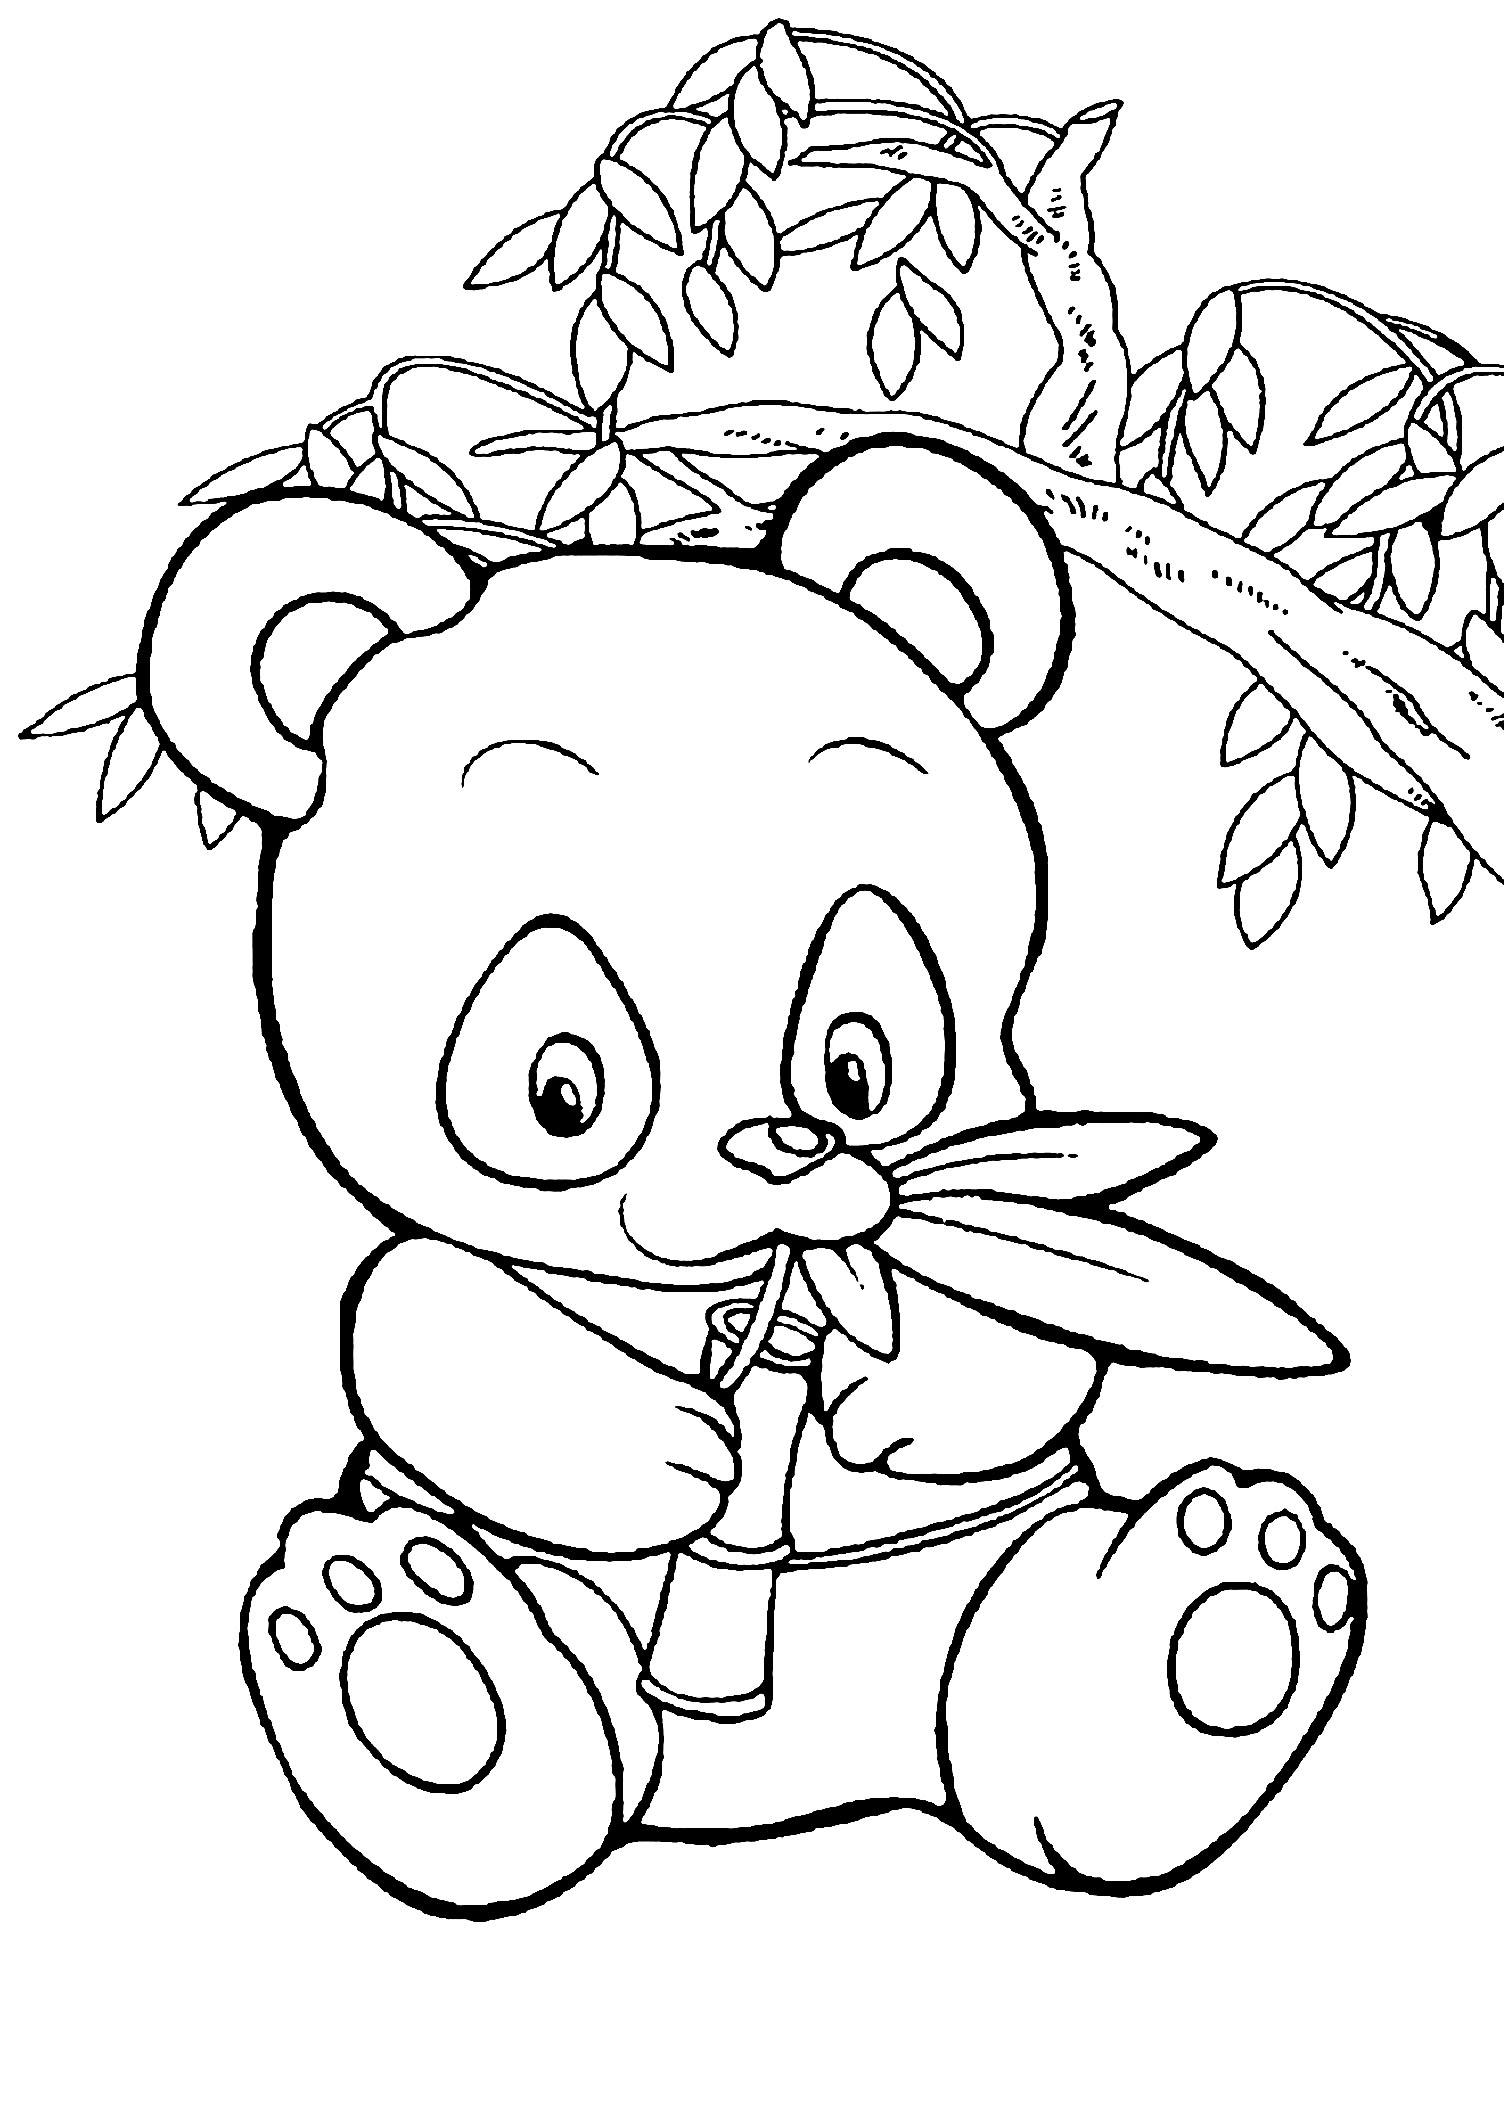 Pandas to color for kids - Pandas Kids Coloring Pages